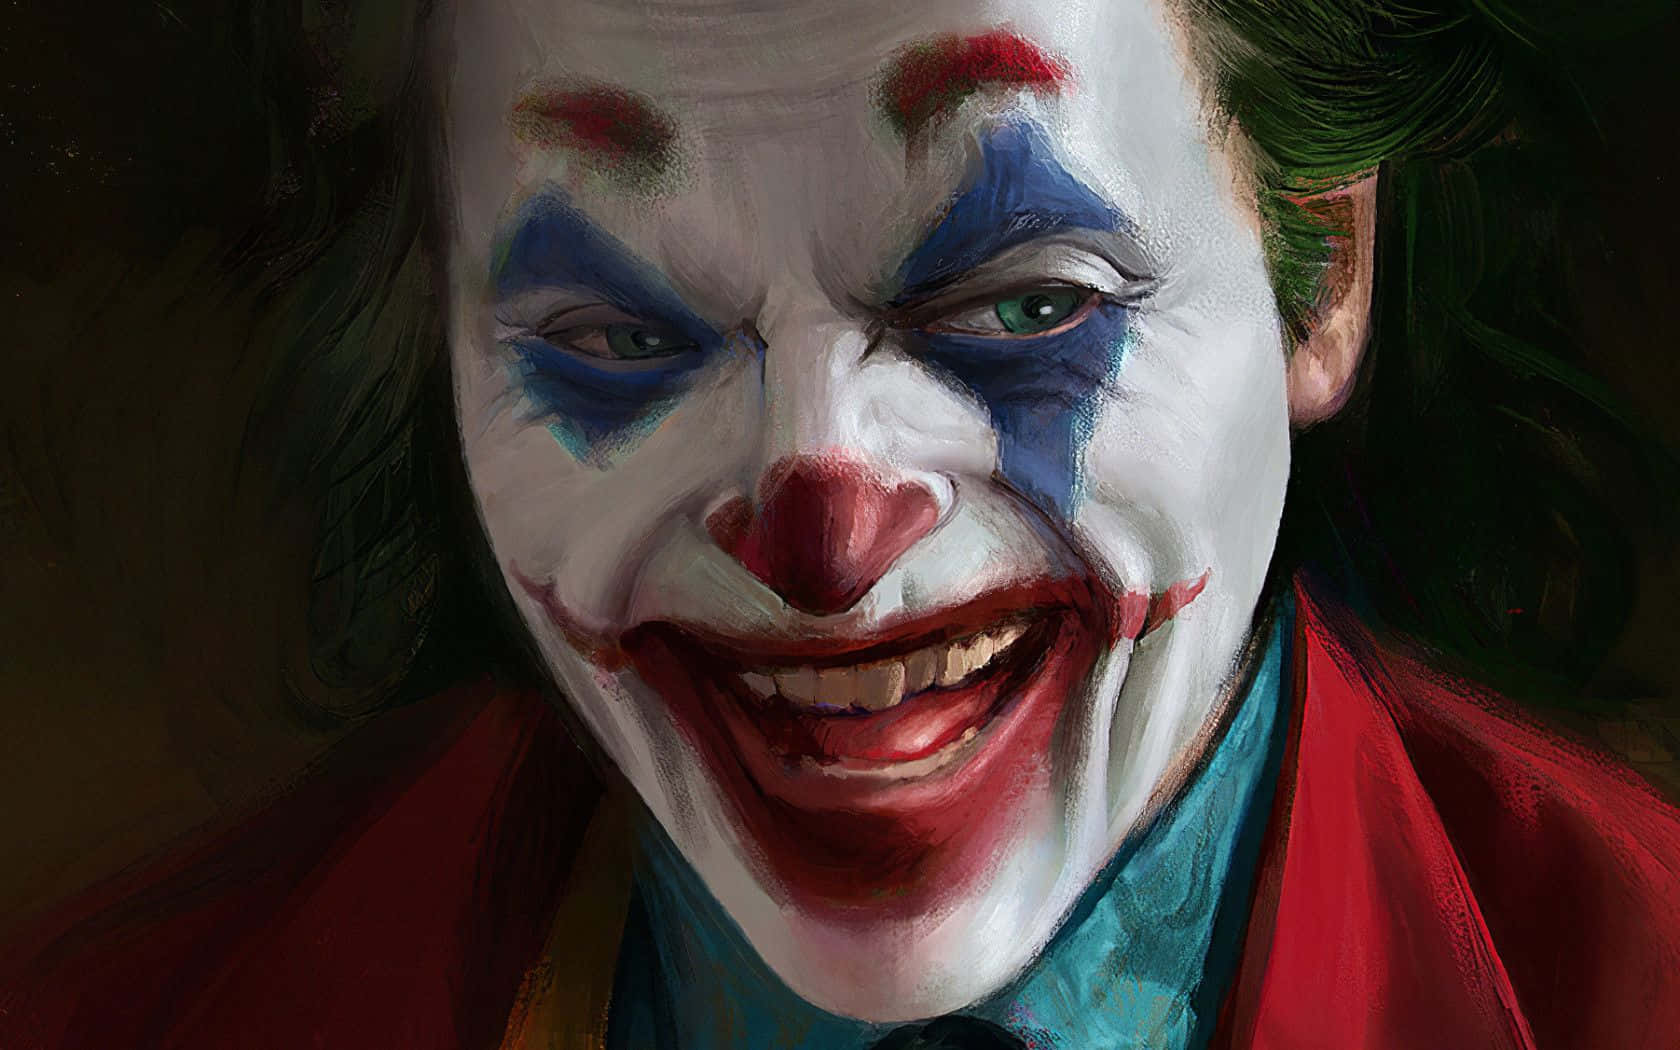 Dangerous Joker Creepy Digital Art Wallpaper